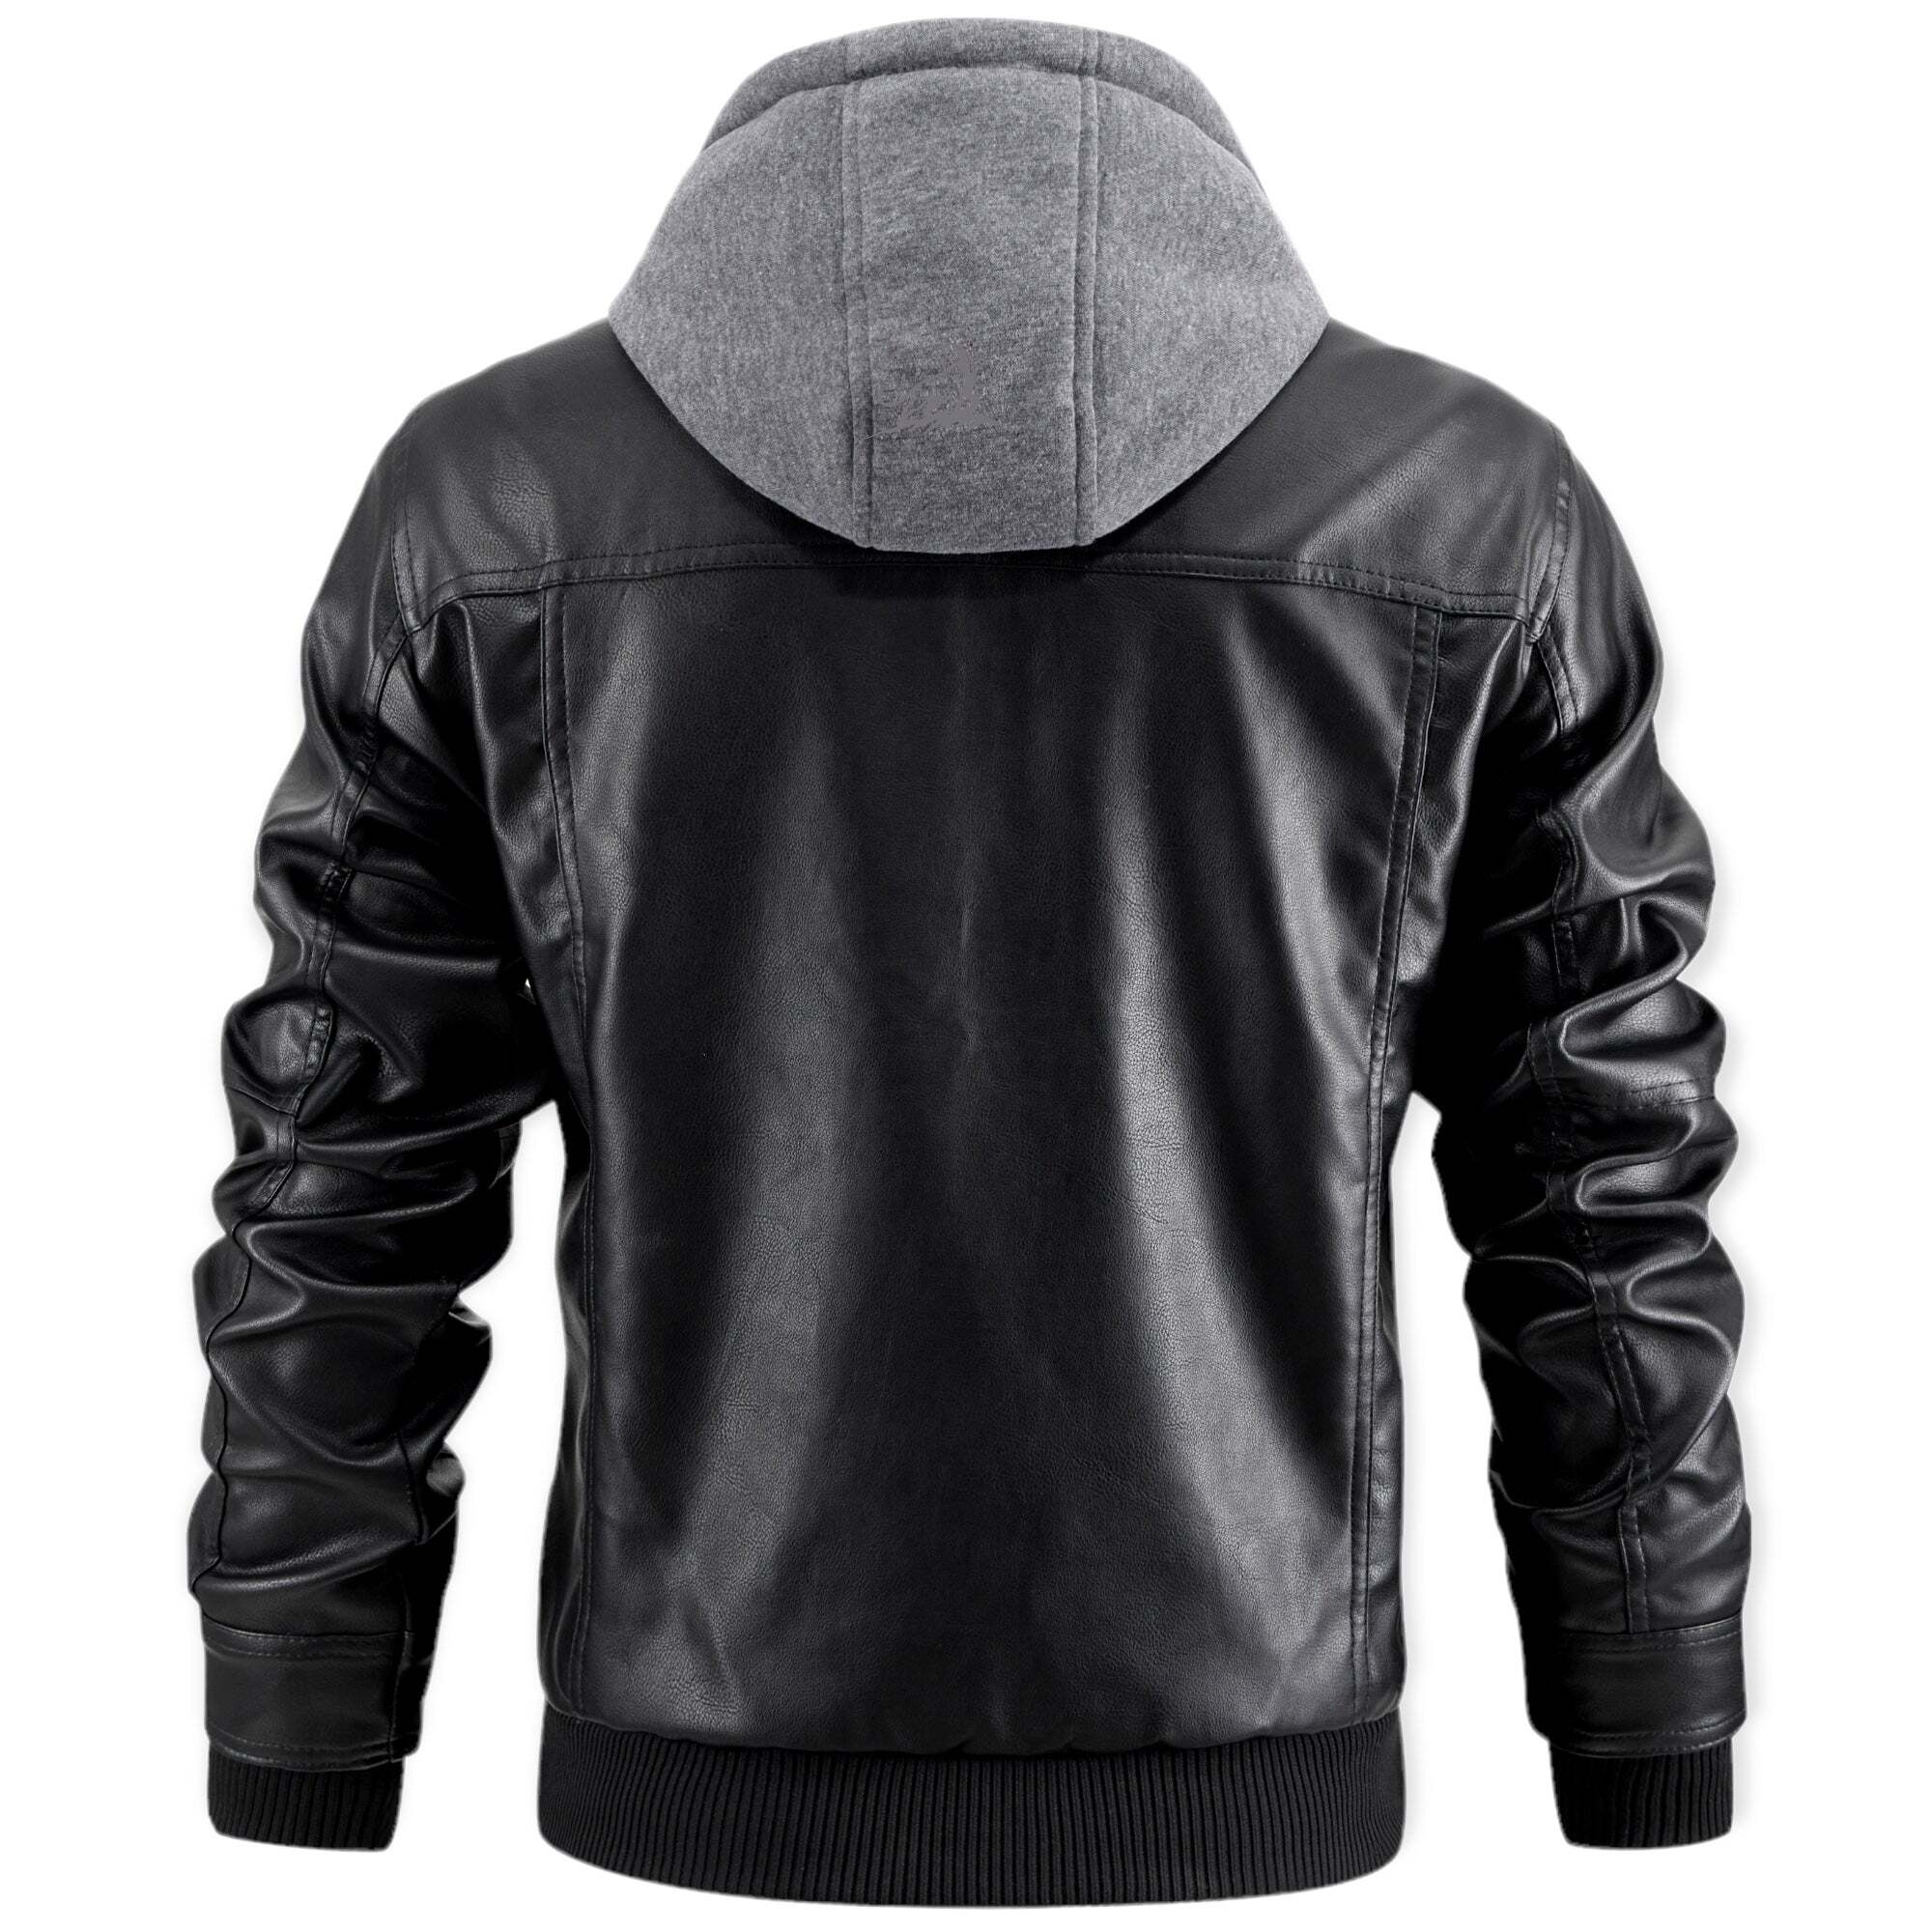 'Warrior' Leather Jacket